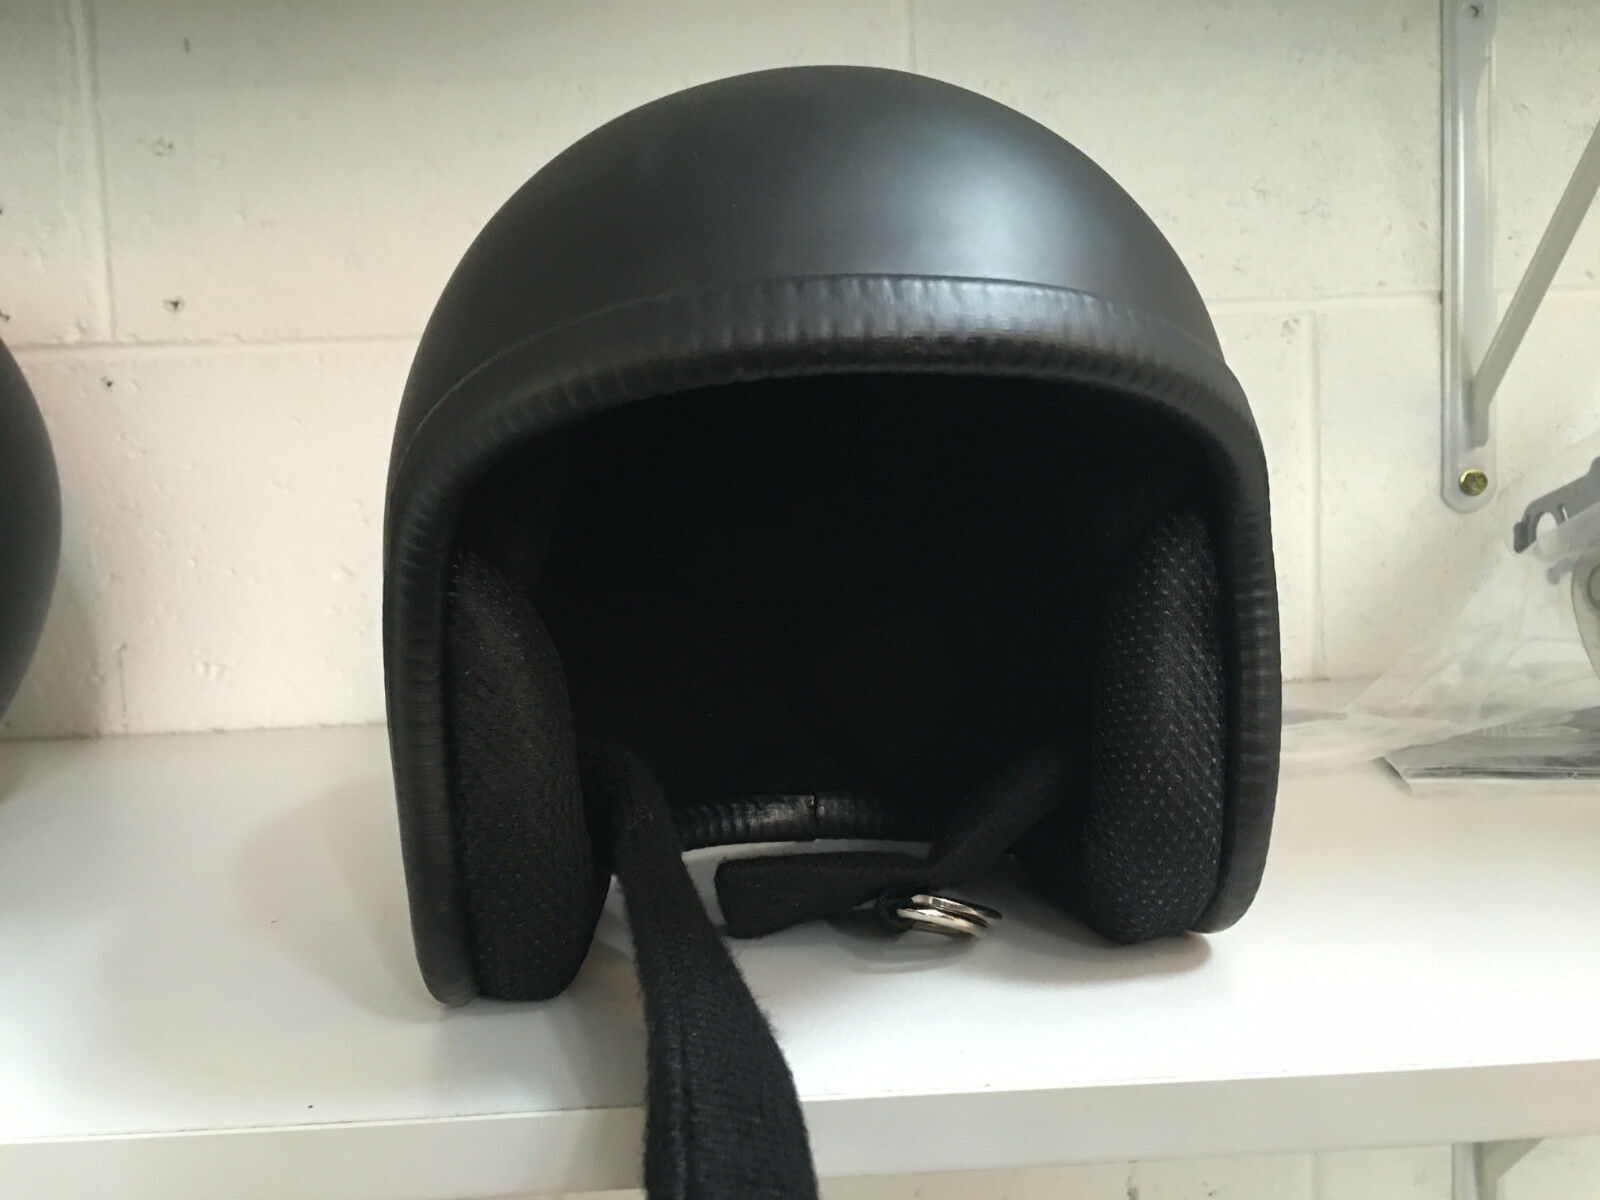 Lowest Profile Open face Grid Skull Cap Novelty Helmet Matt Black